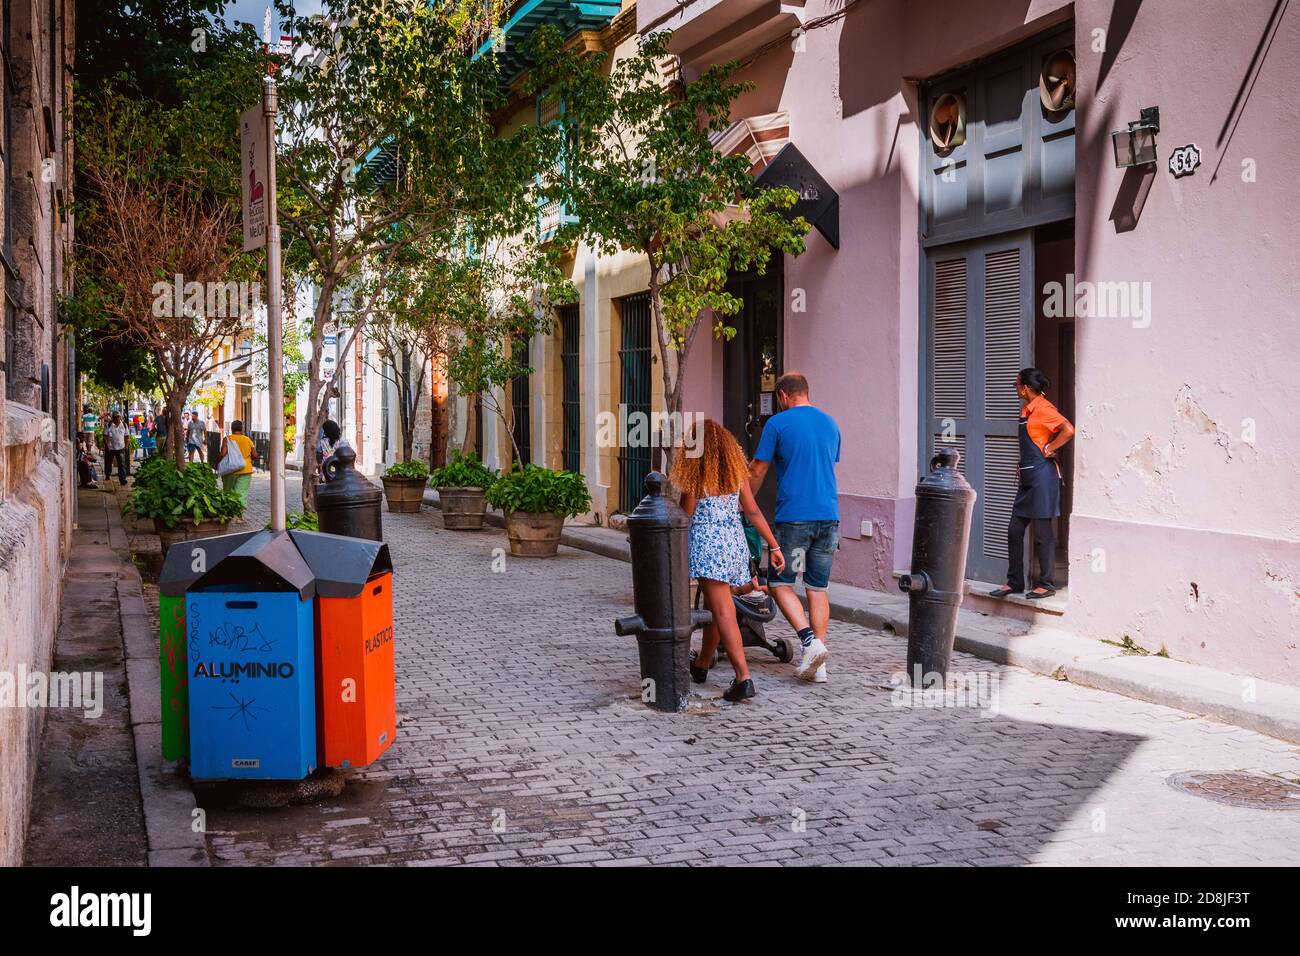 Amargura Street. Kubanische lokale Atmosphäre in einer beliebten Straße. La Habana - La Havanna, Kuba, Lateinamerika und die Karibik Stockfoto